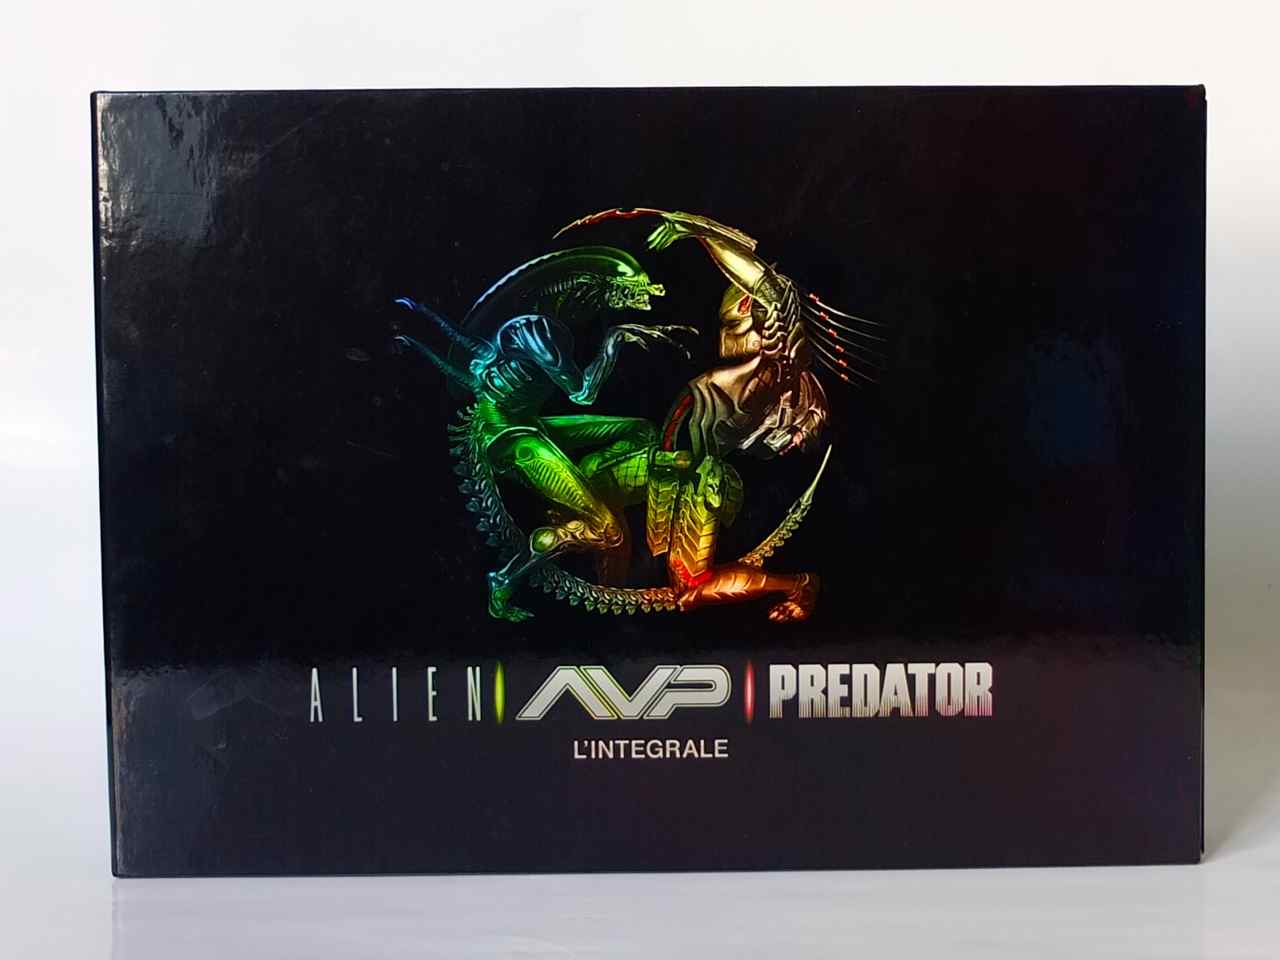 Alien/AVP/Predator Complete Edition